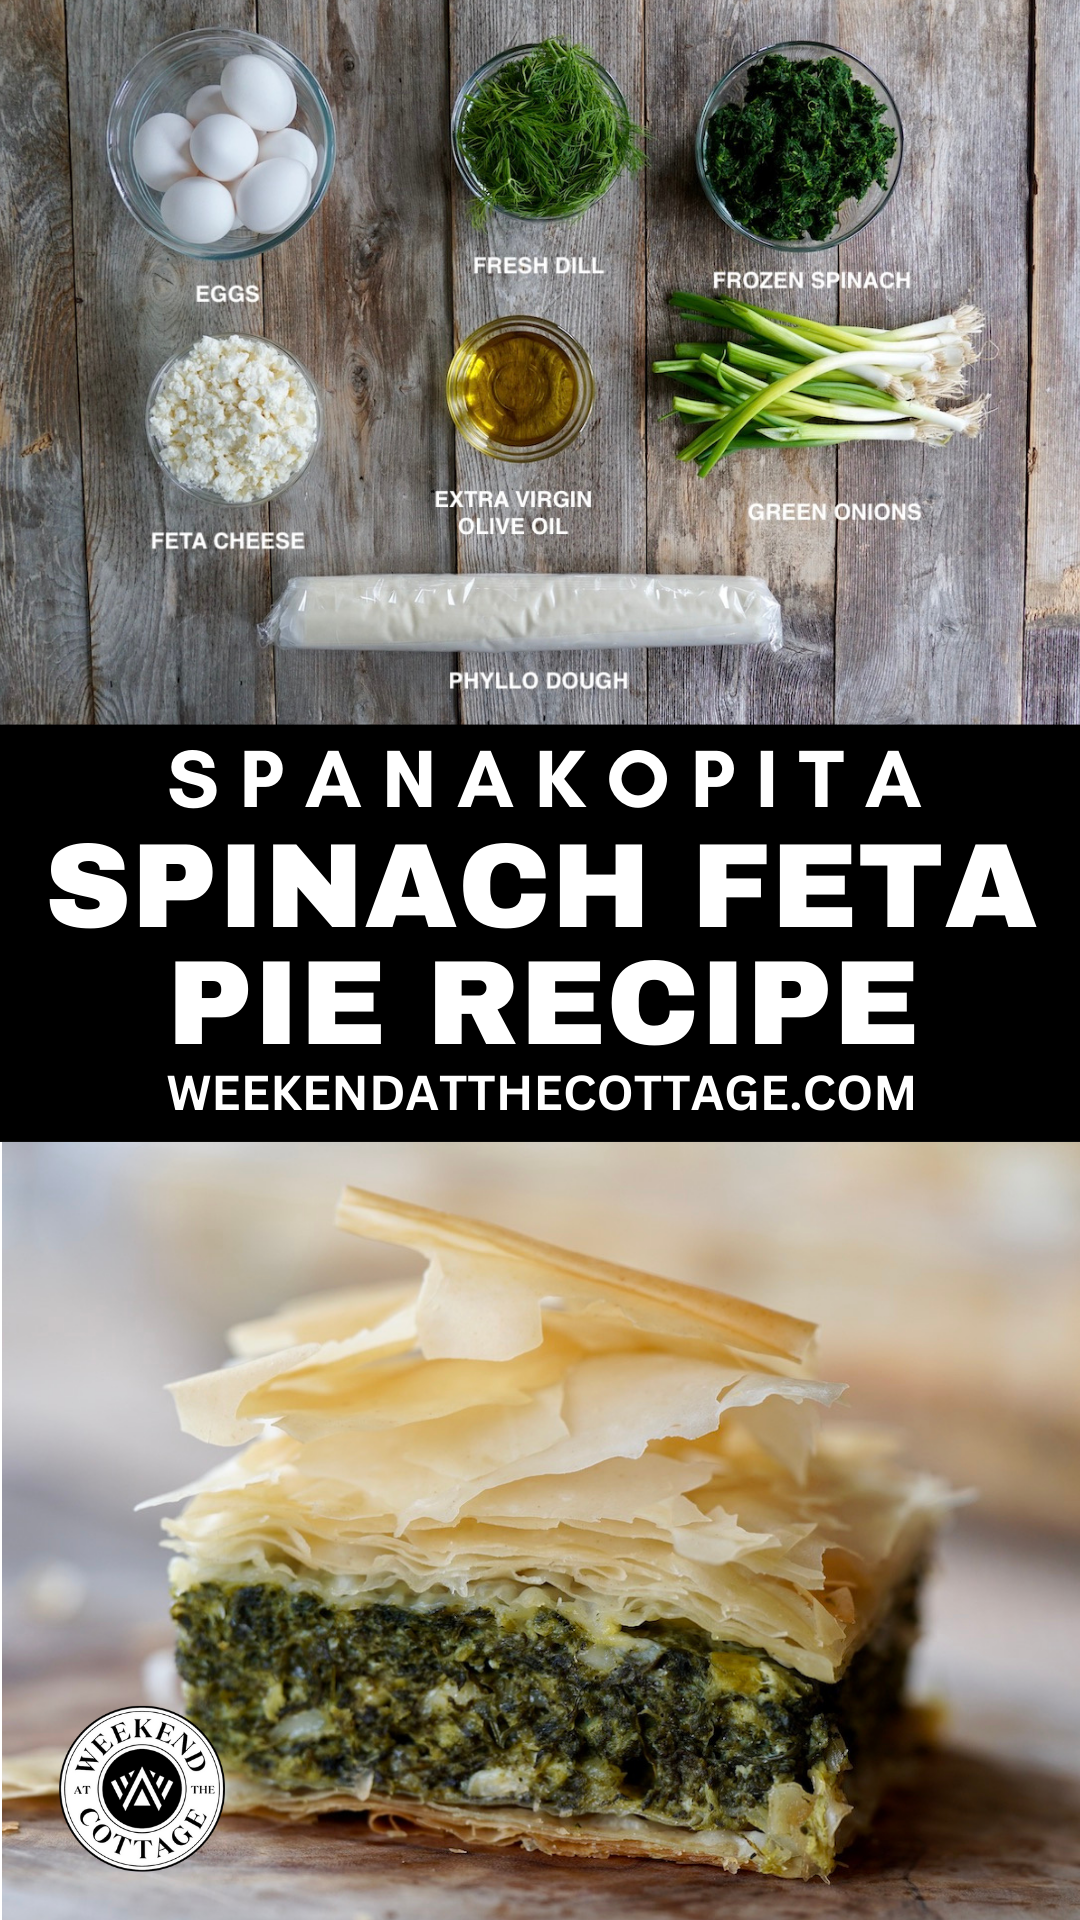 Spinach Feta Pie Recipe